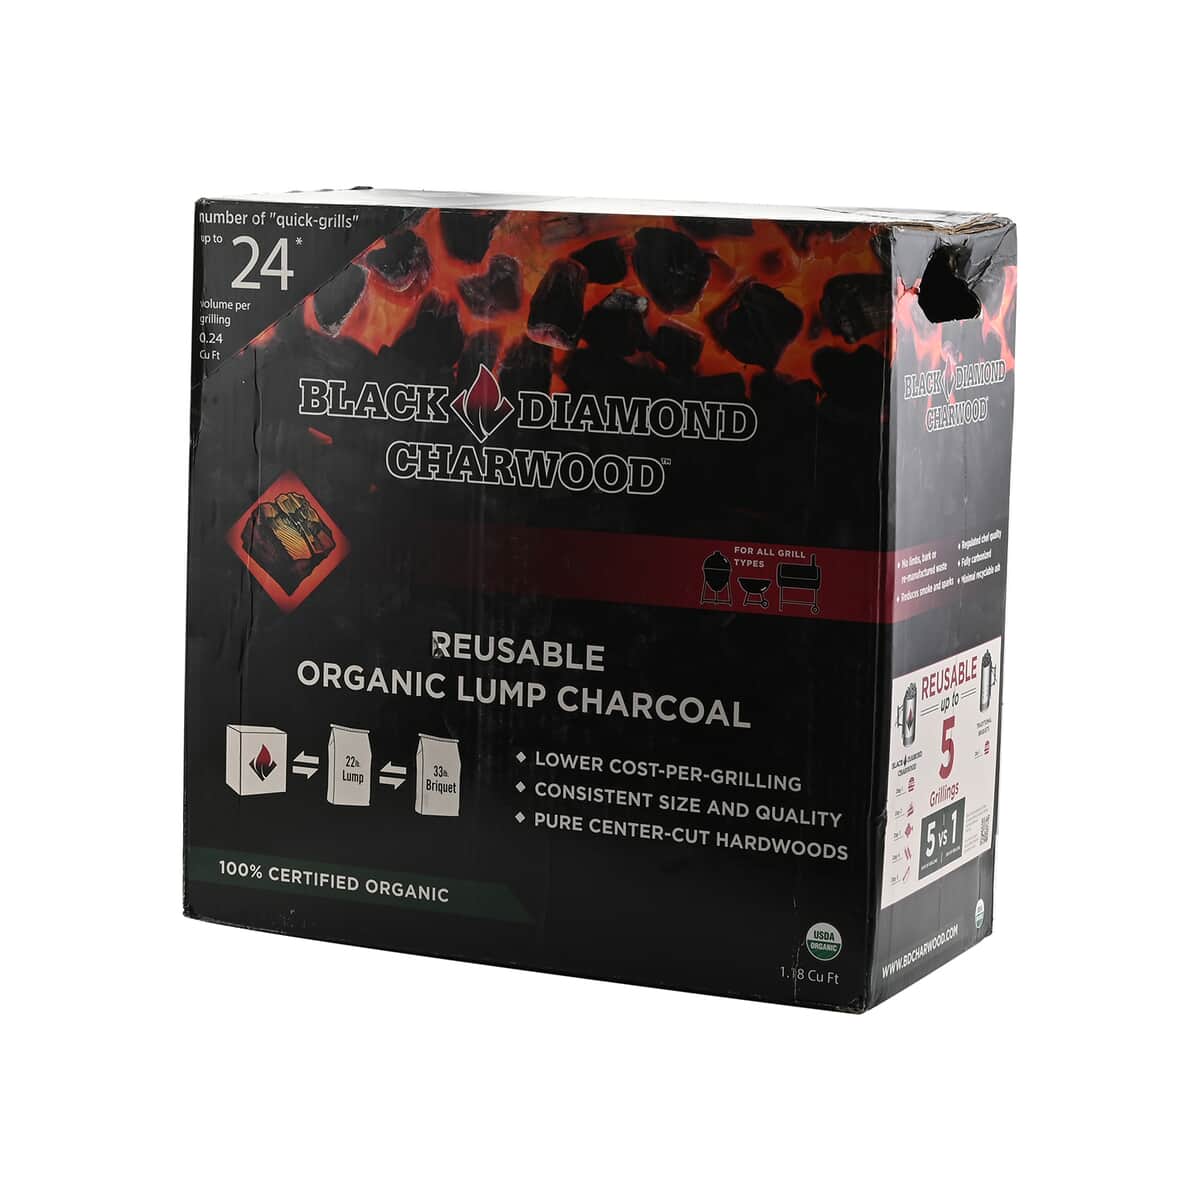 Black Diamond Charwood Reusable Organic Lump Charcoal 1.18 Cu. Ft image number 2